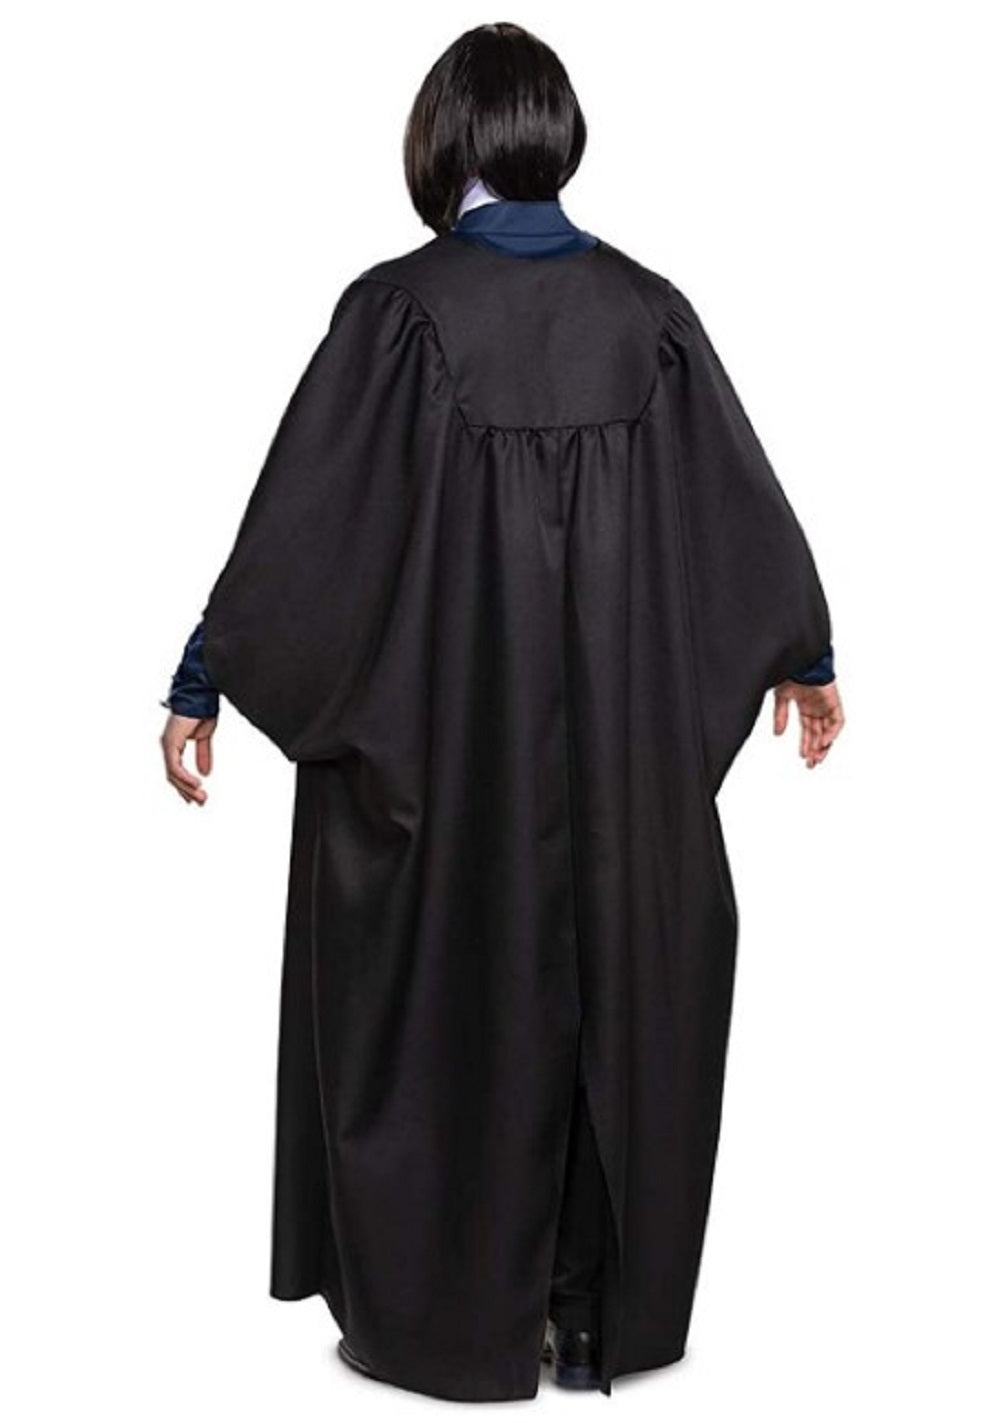 Severus Snape - Wizarding World of Harry Potter - Costume - Adult - 2 Sizes